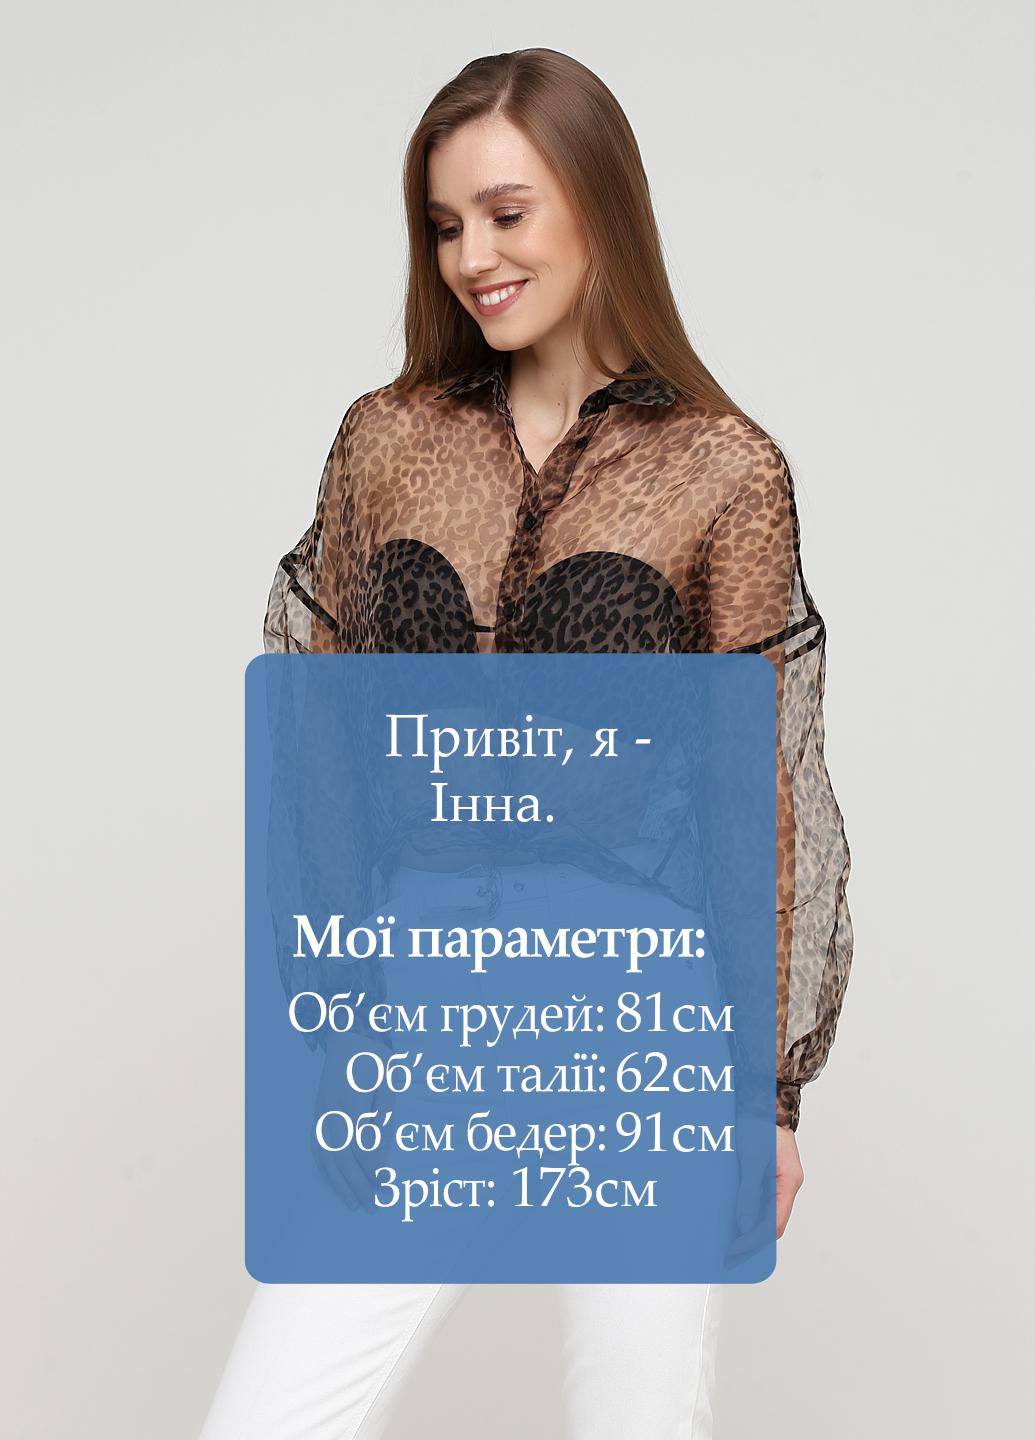 Оливковая (хаки) летняя блуза Bershka